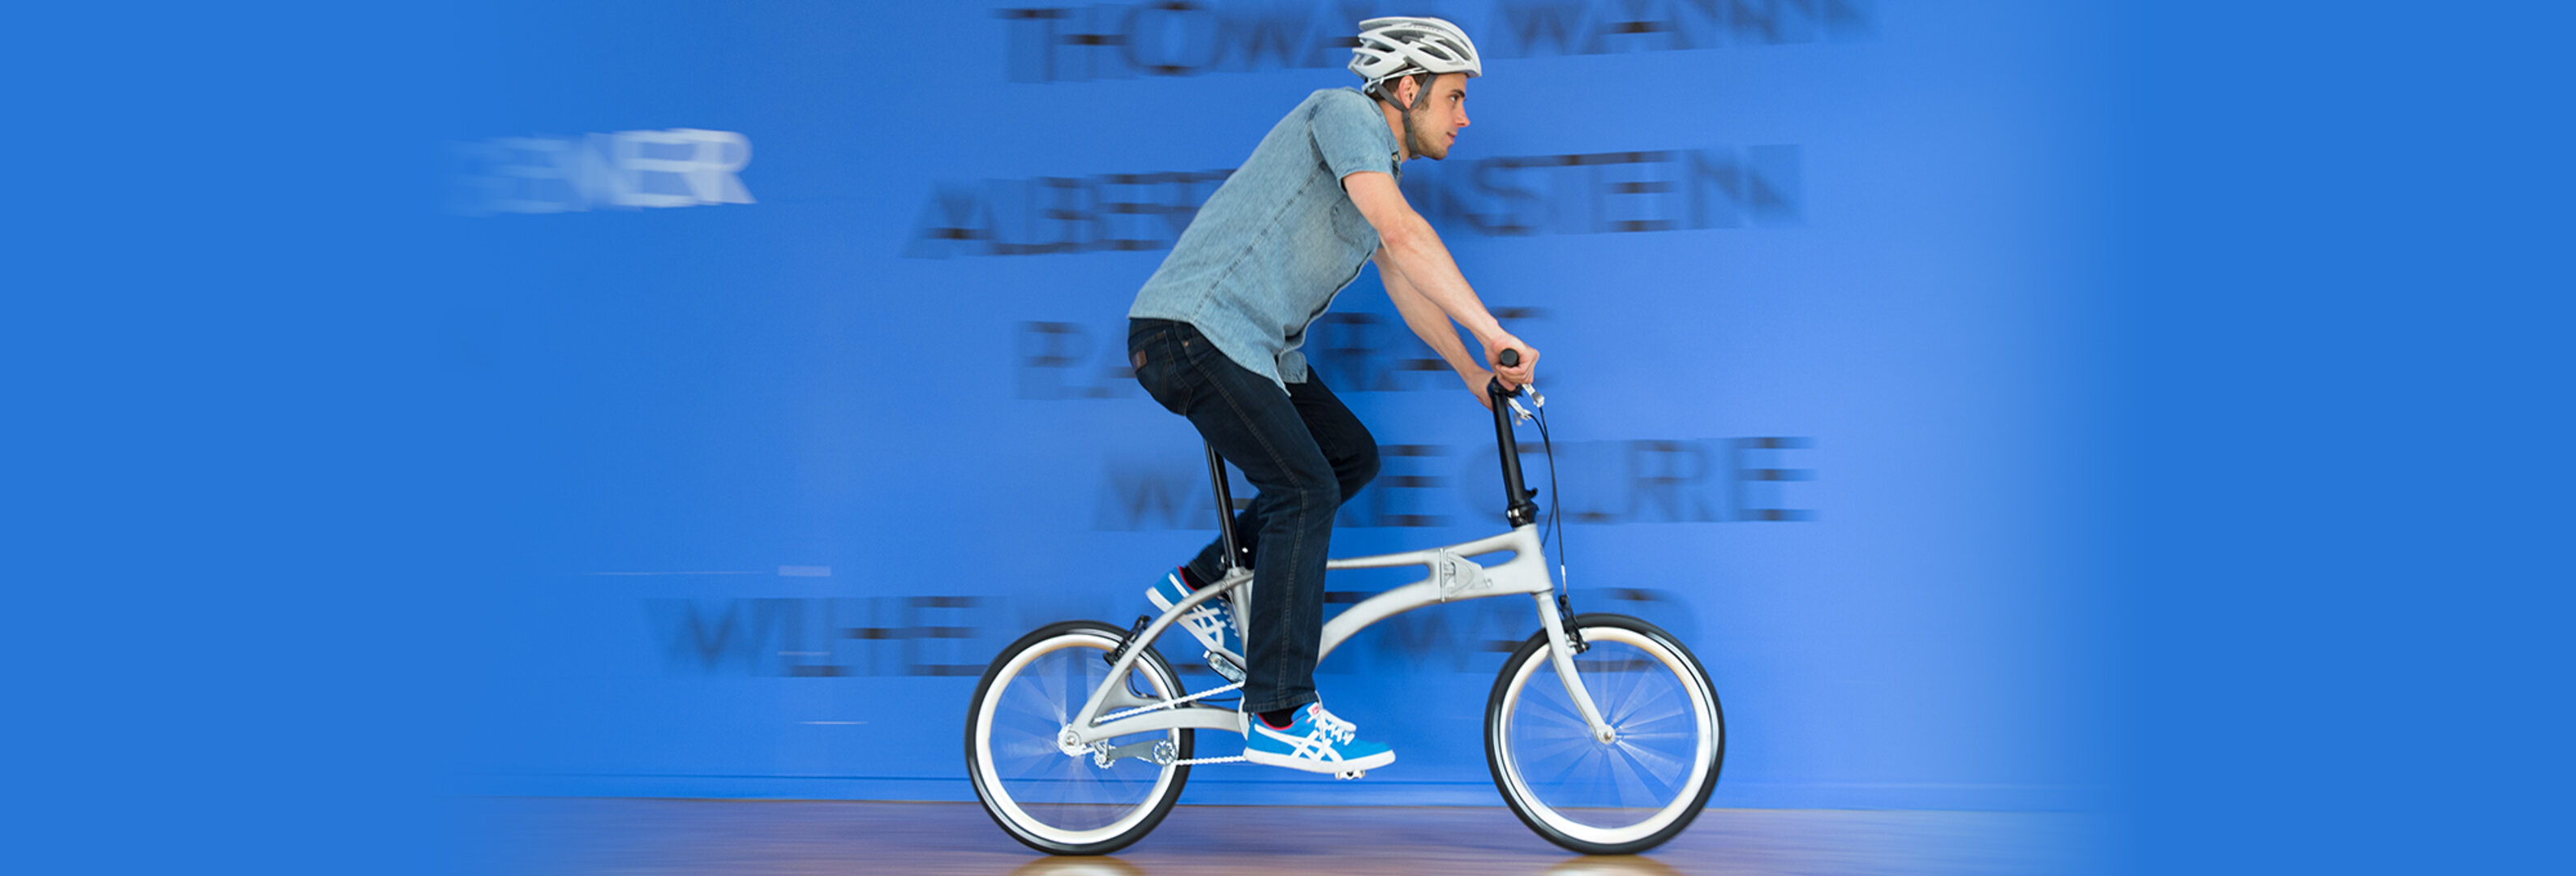 Bionic Bike produced by ELiSE technology